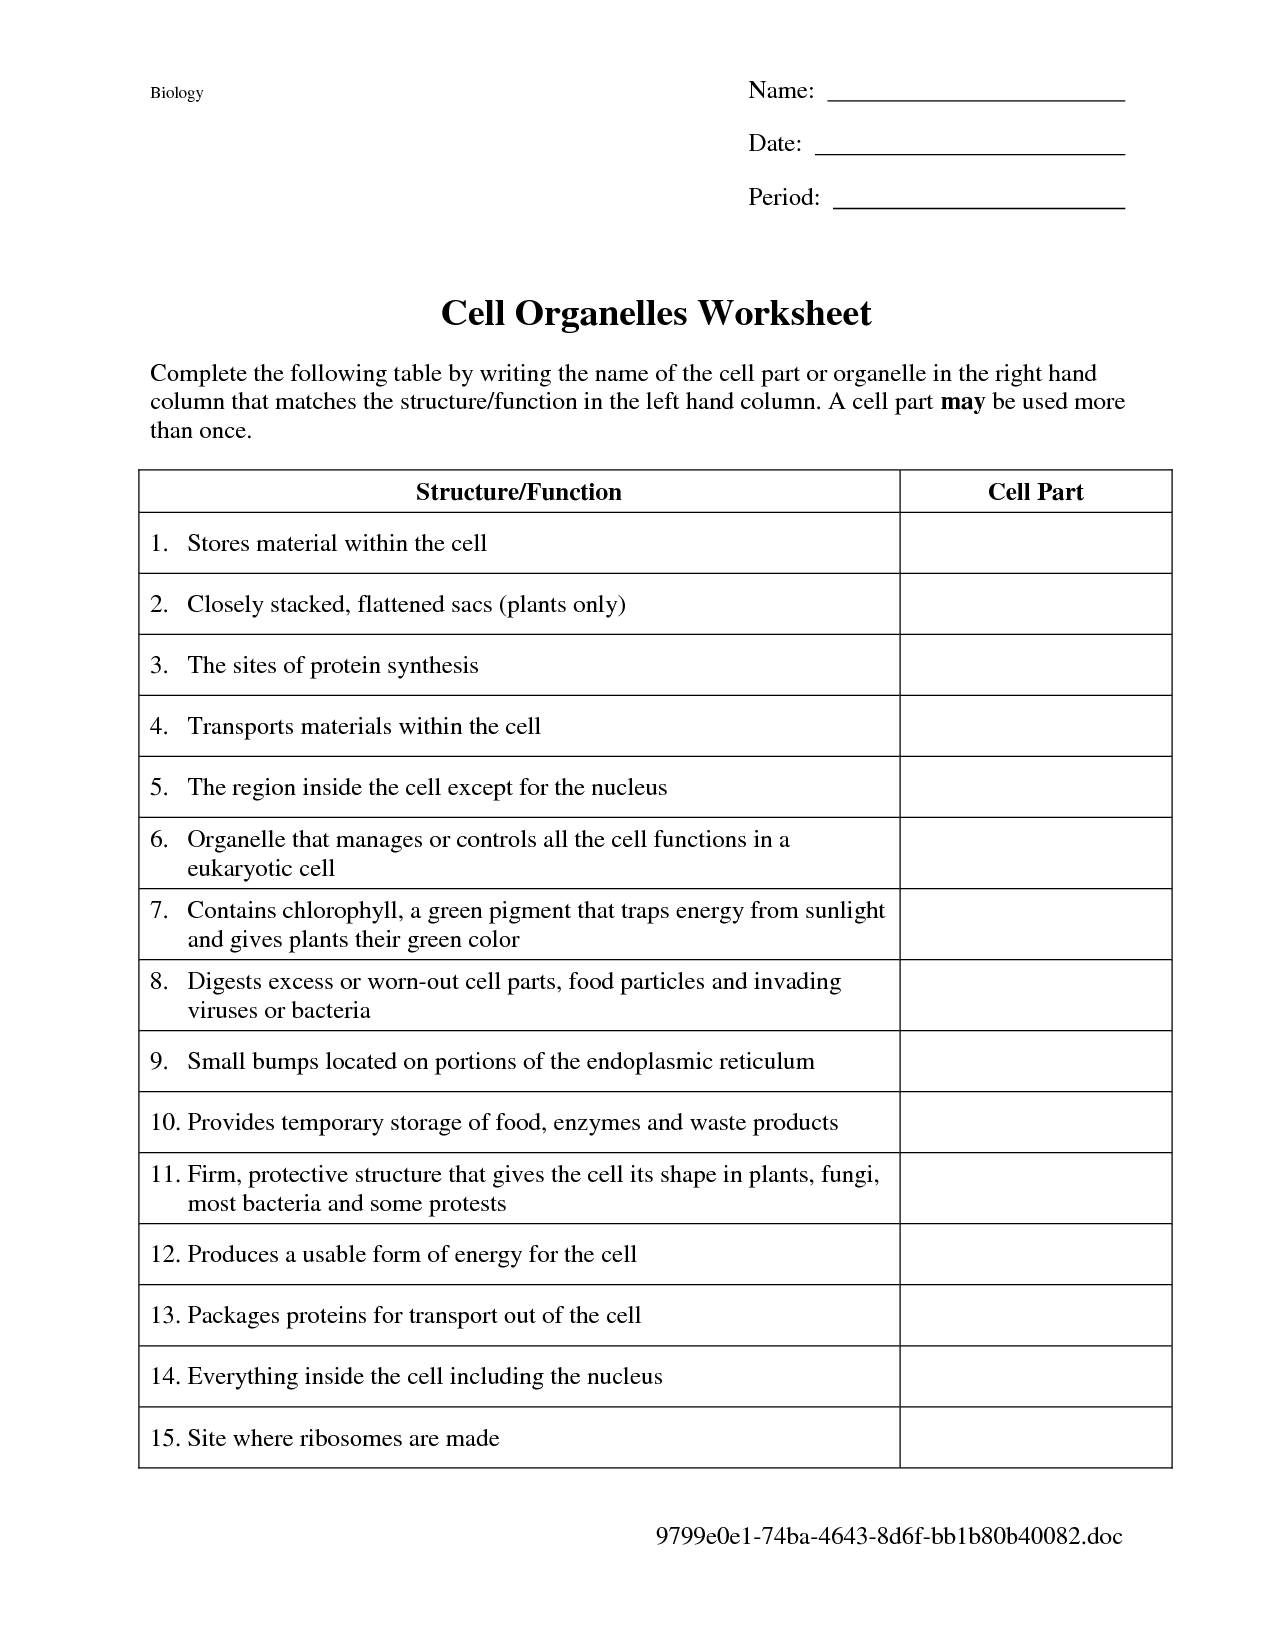 bacteria-worksheet-answer-key